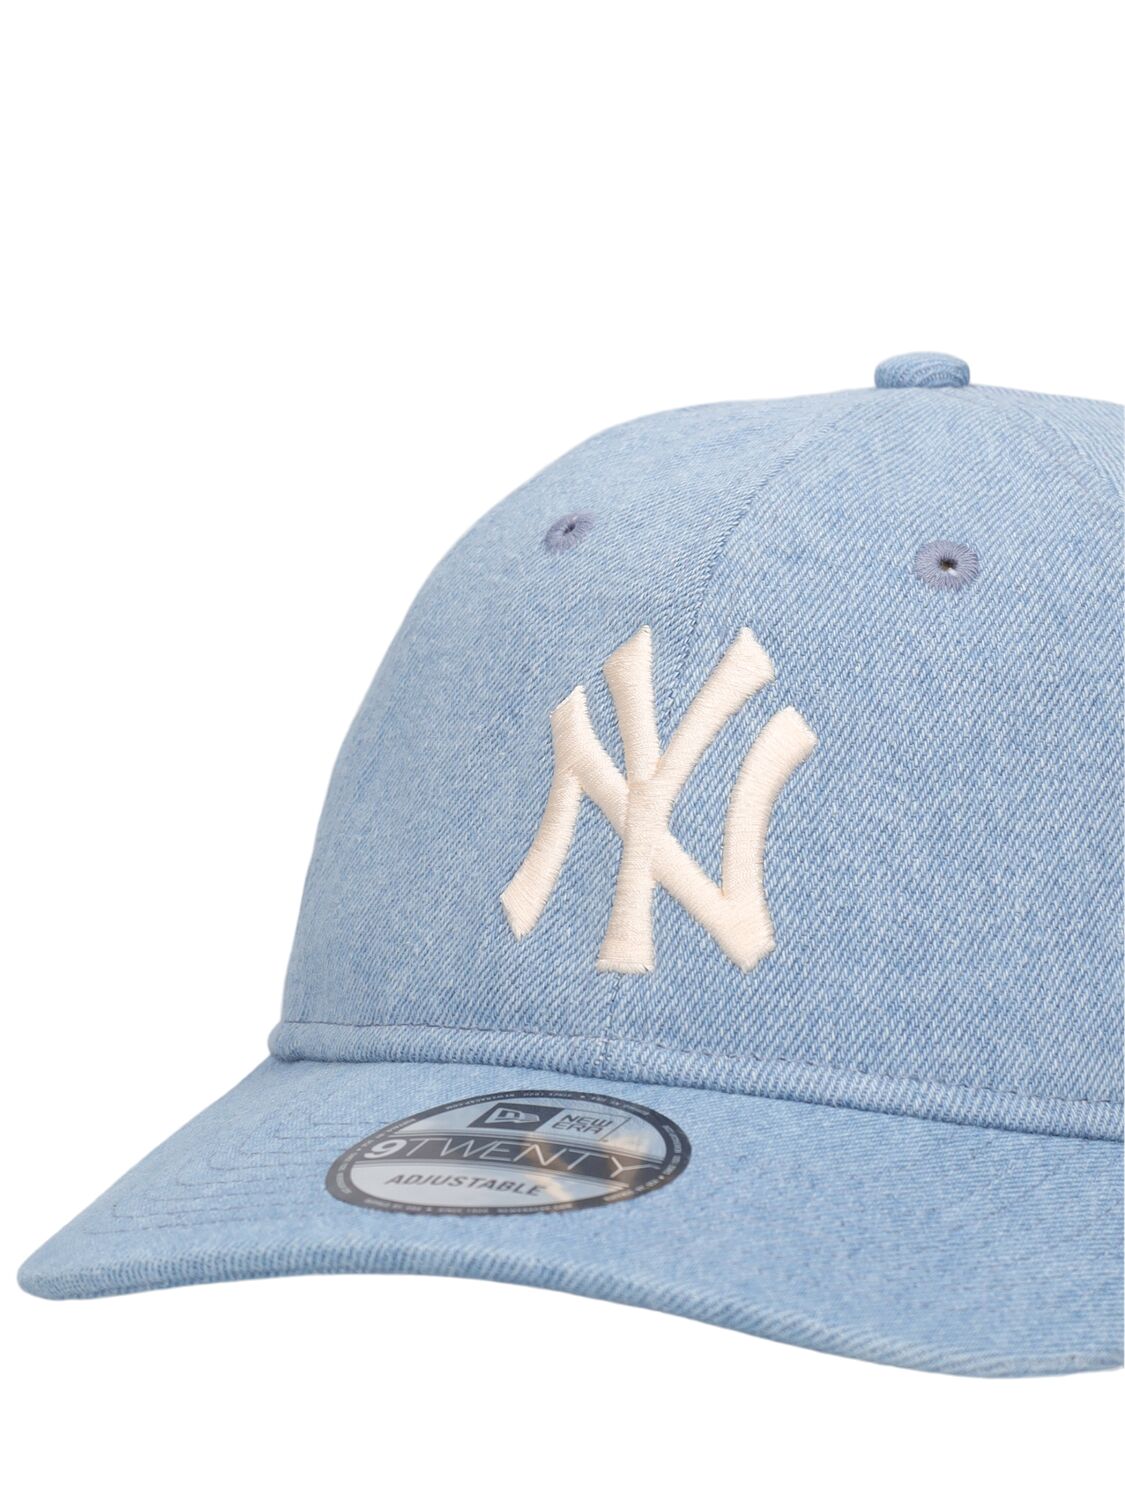 WASHED DENIM NEW YORK YANKEES棒球帽